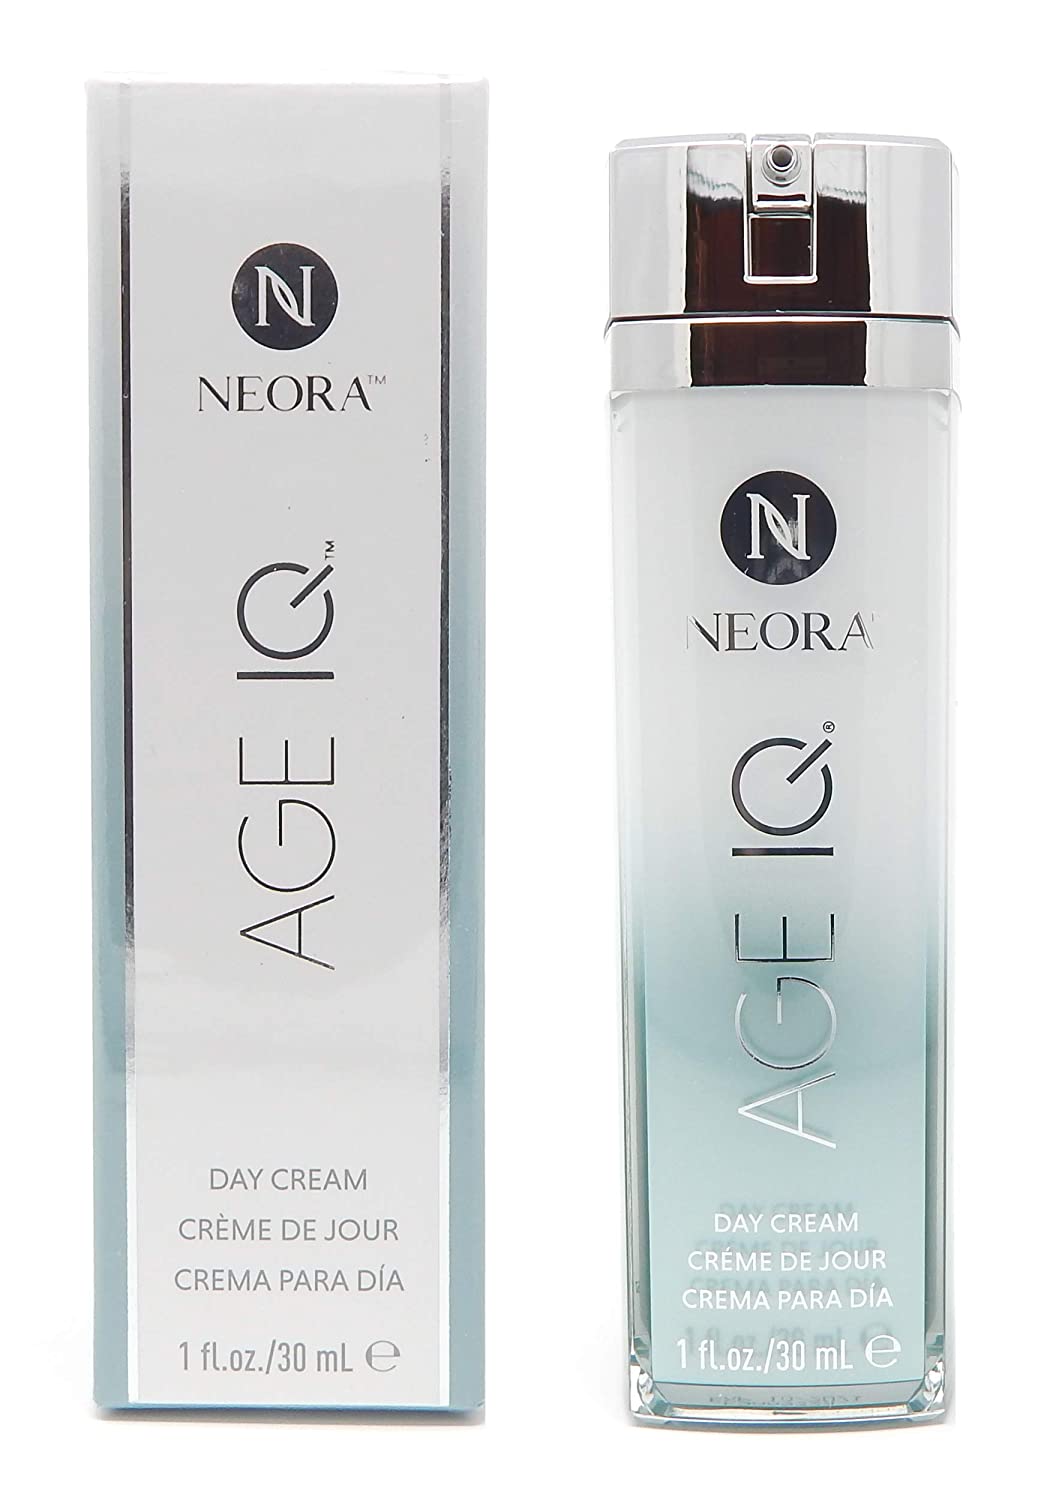 Neora Age IQ Night Cream Reviews | Reliable? (Unbiased Review)